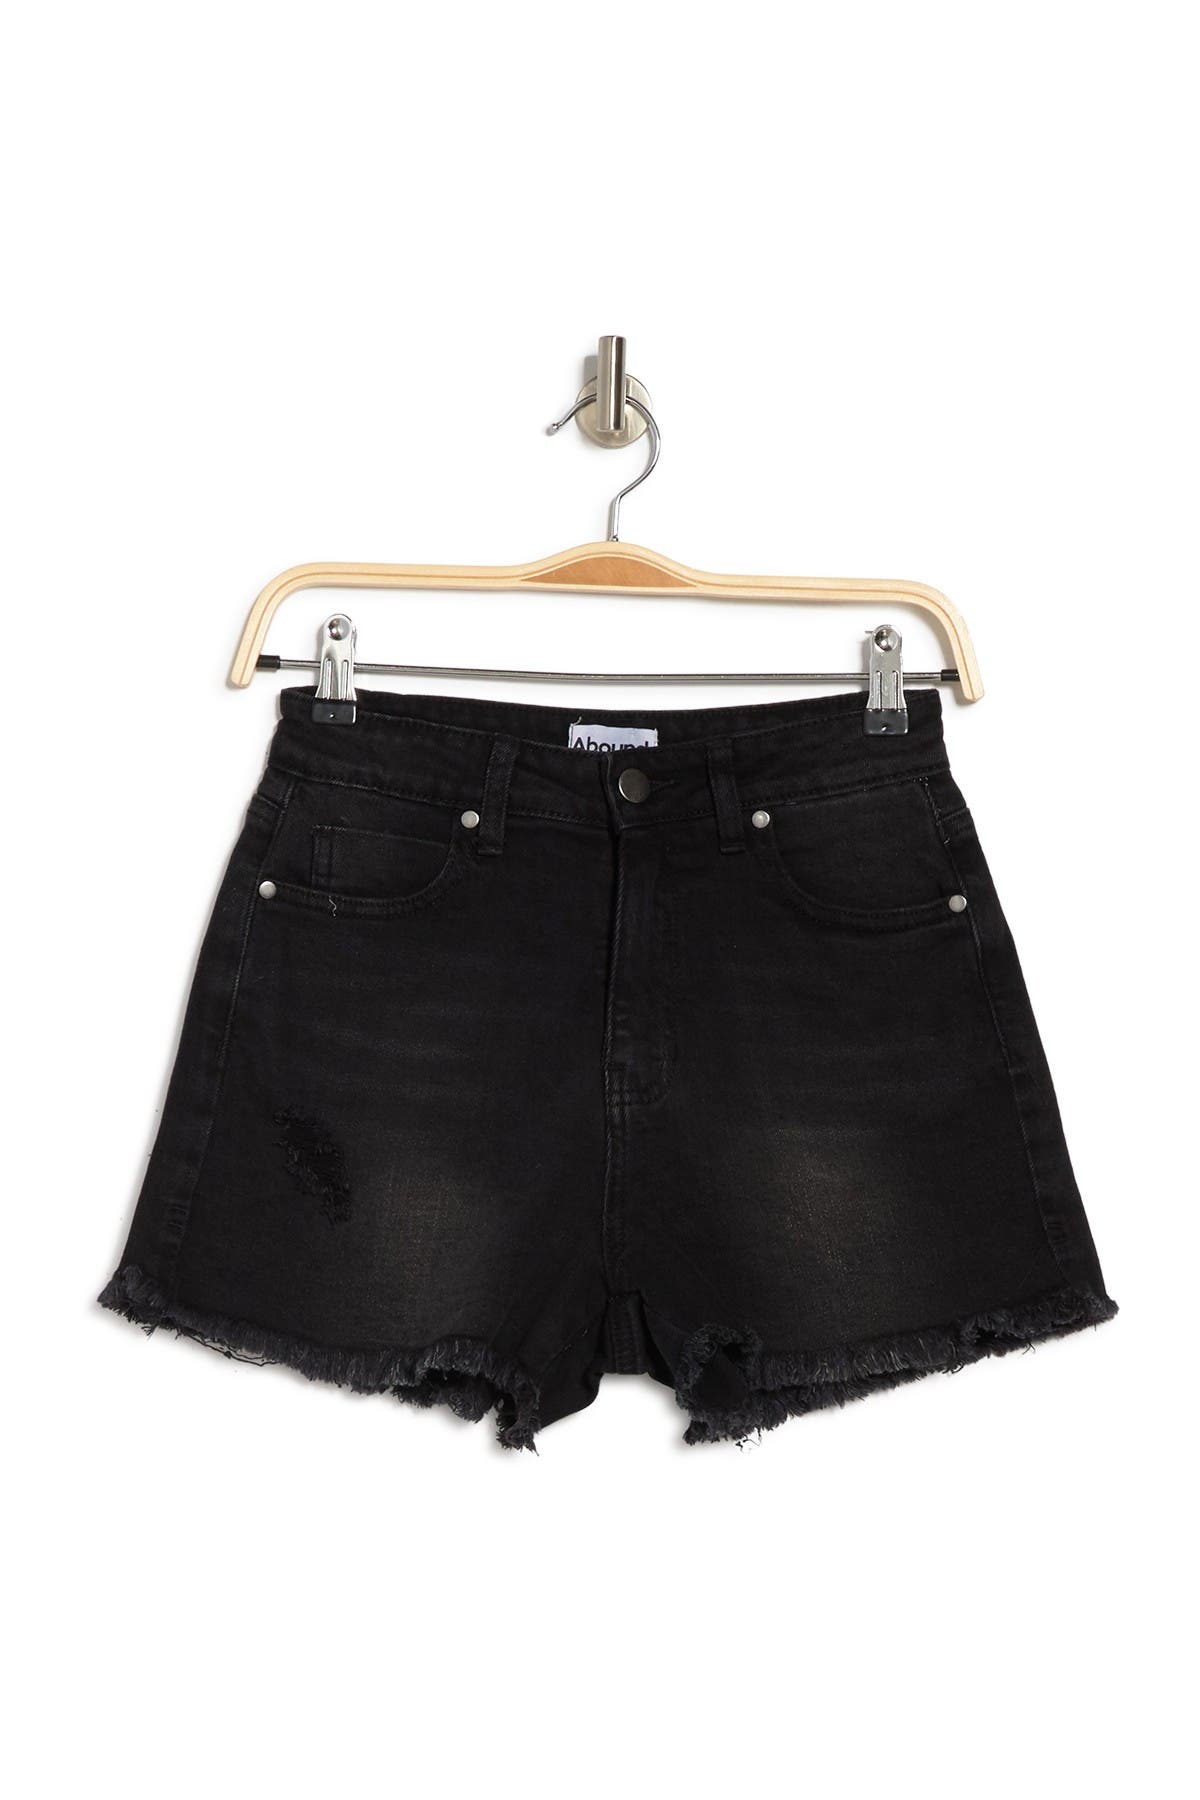 Abound Frayed Hem Sustainable Denim Shorts In Black Wash